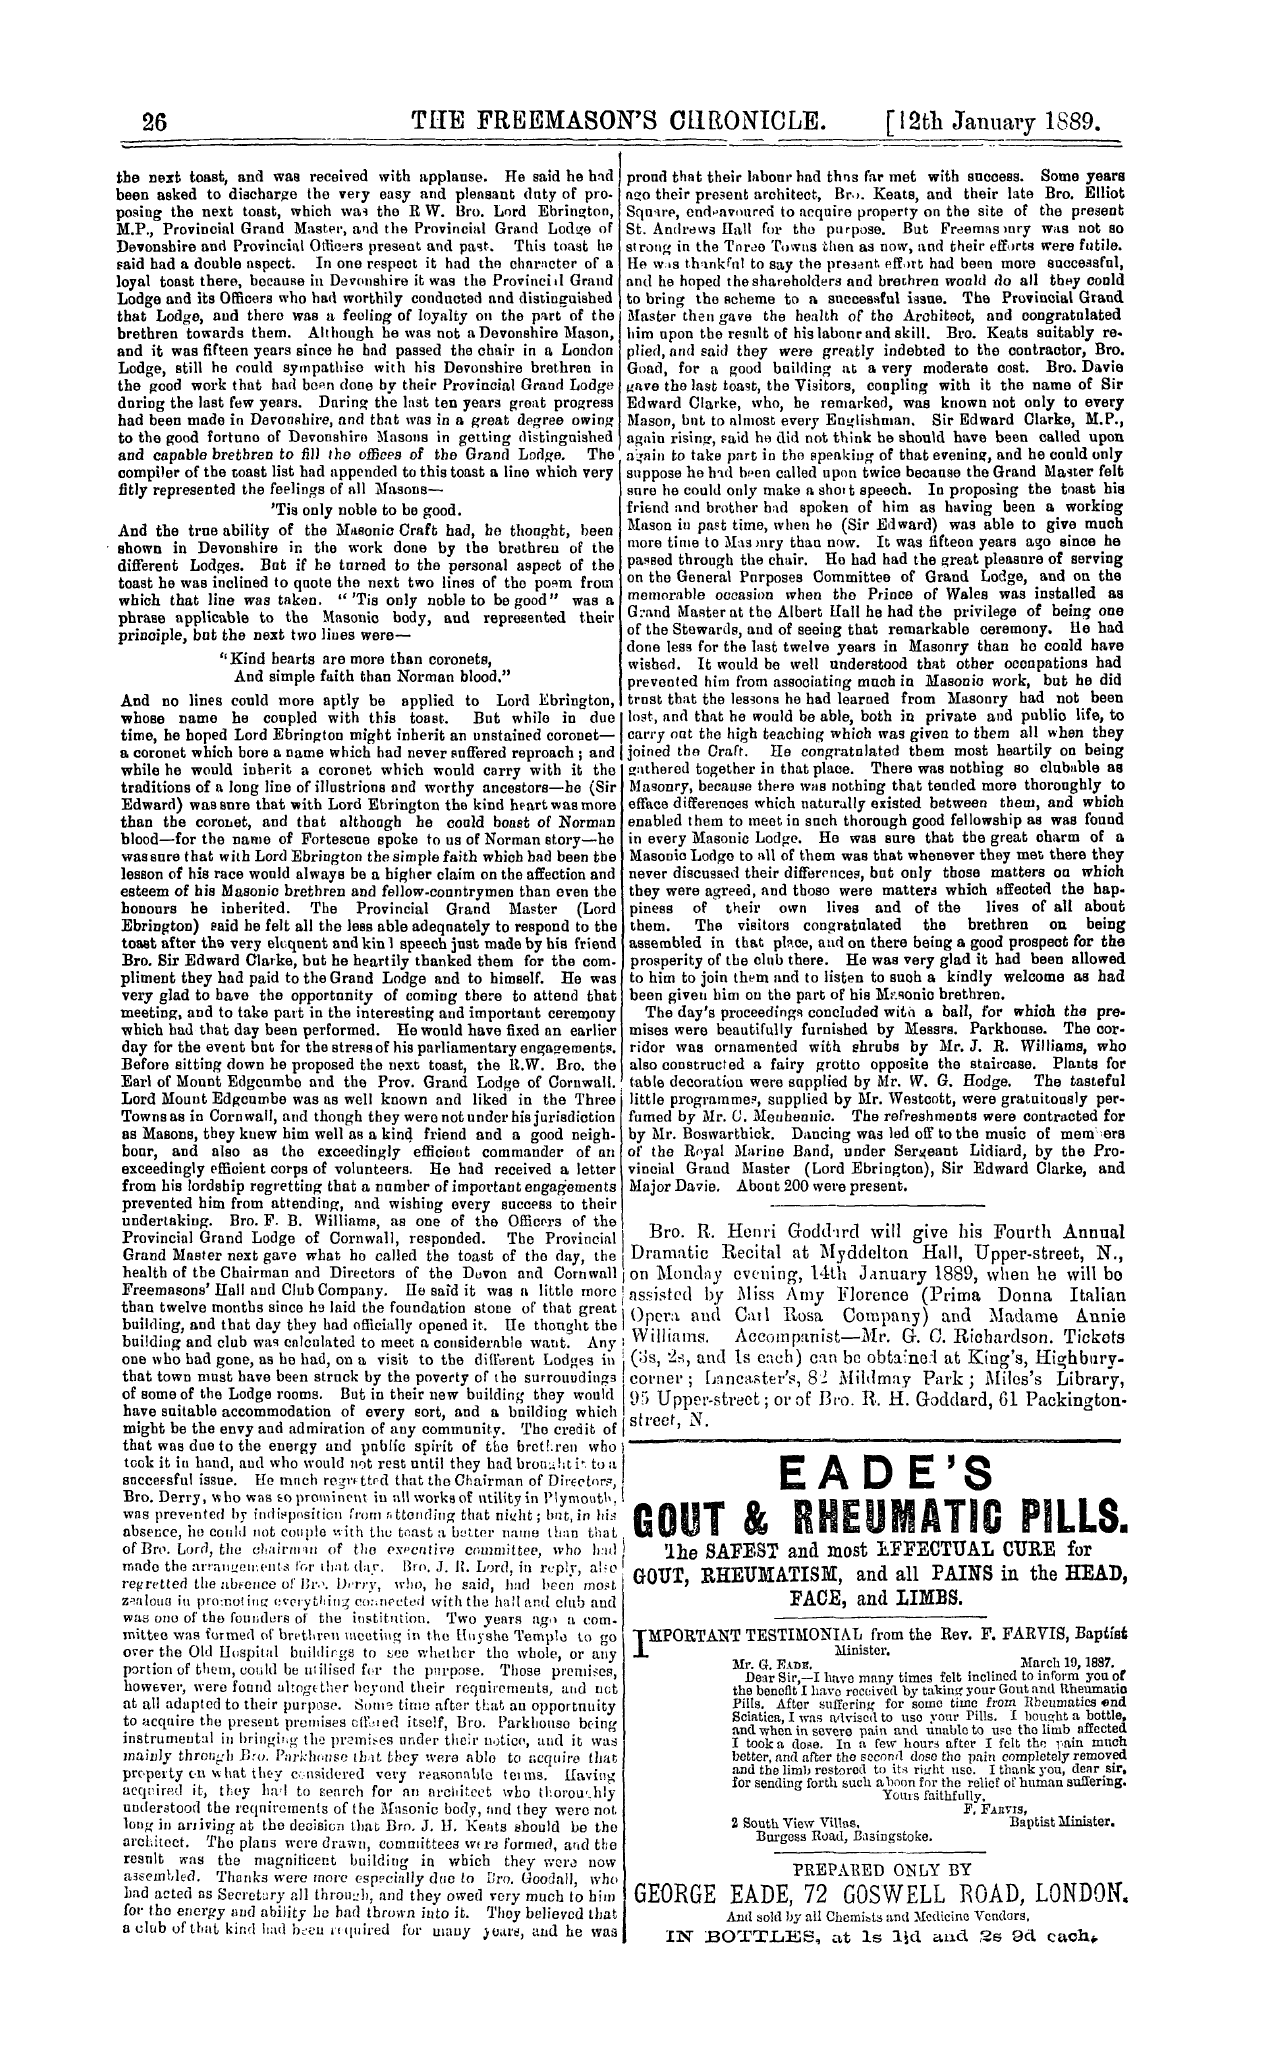 The Freemason's Chronicle: 1889-01-12: 10